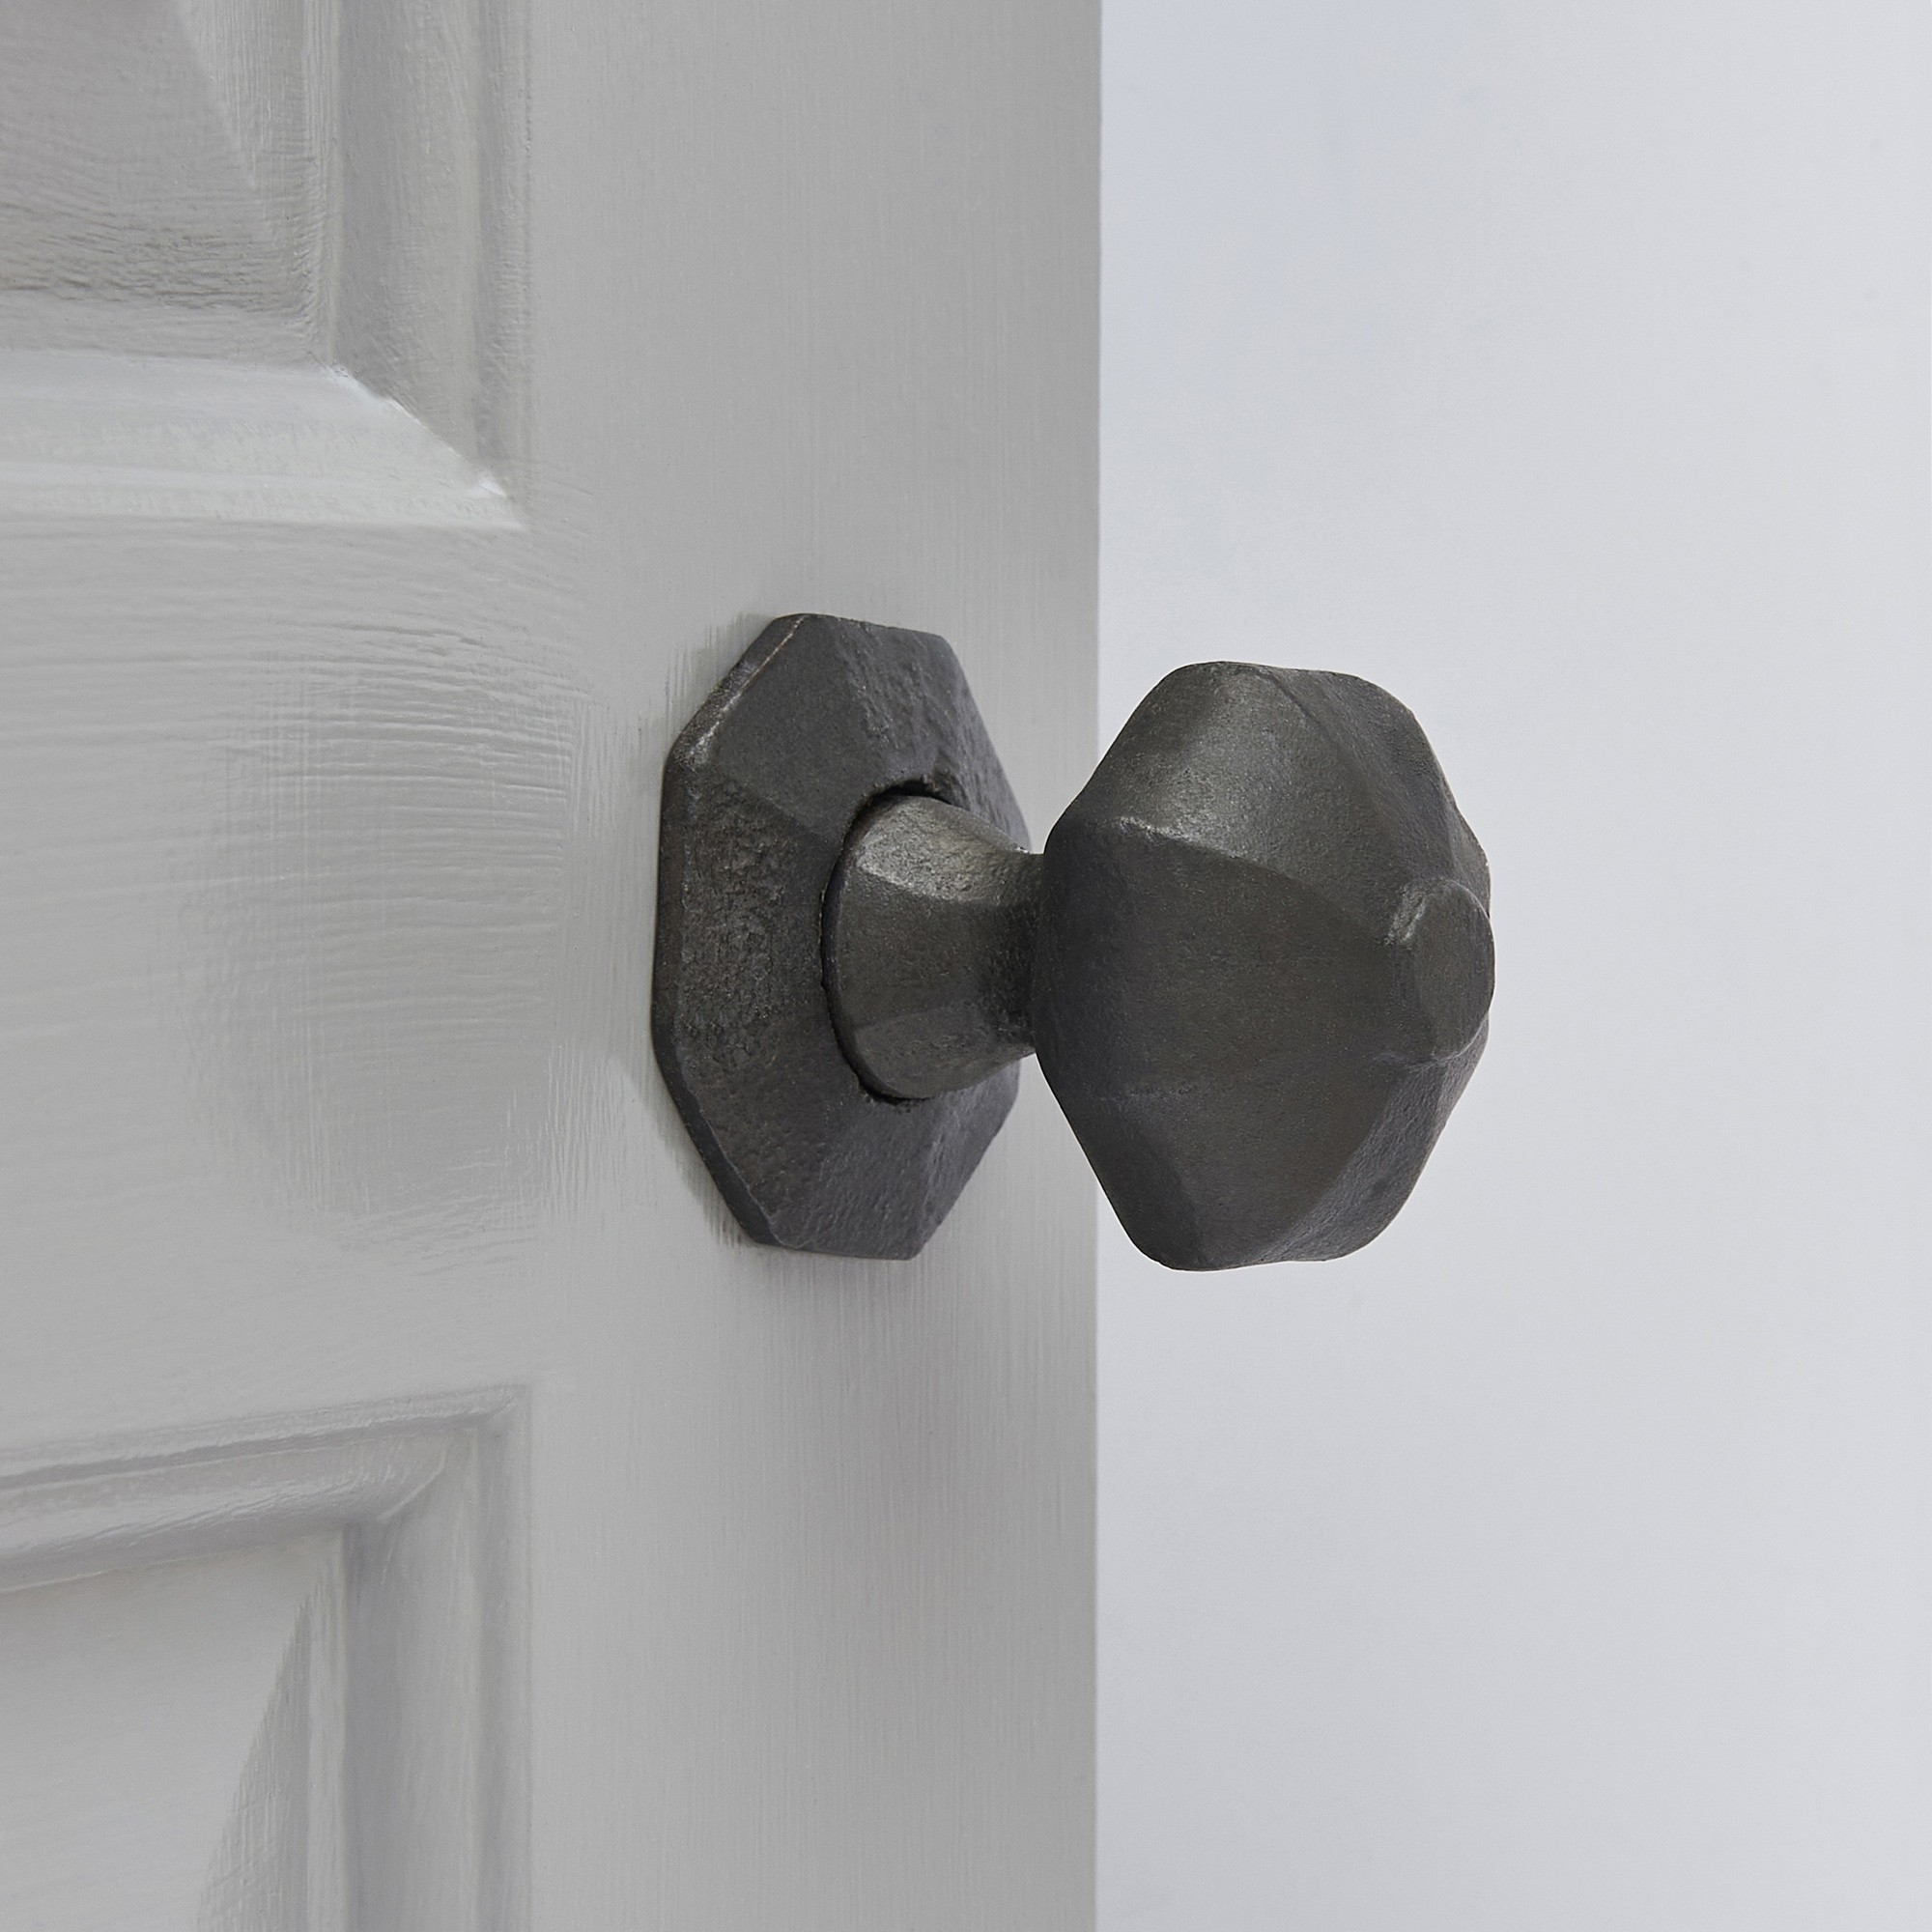 octagonal-forged-door-knobs-pair-black-waxed